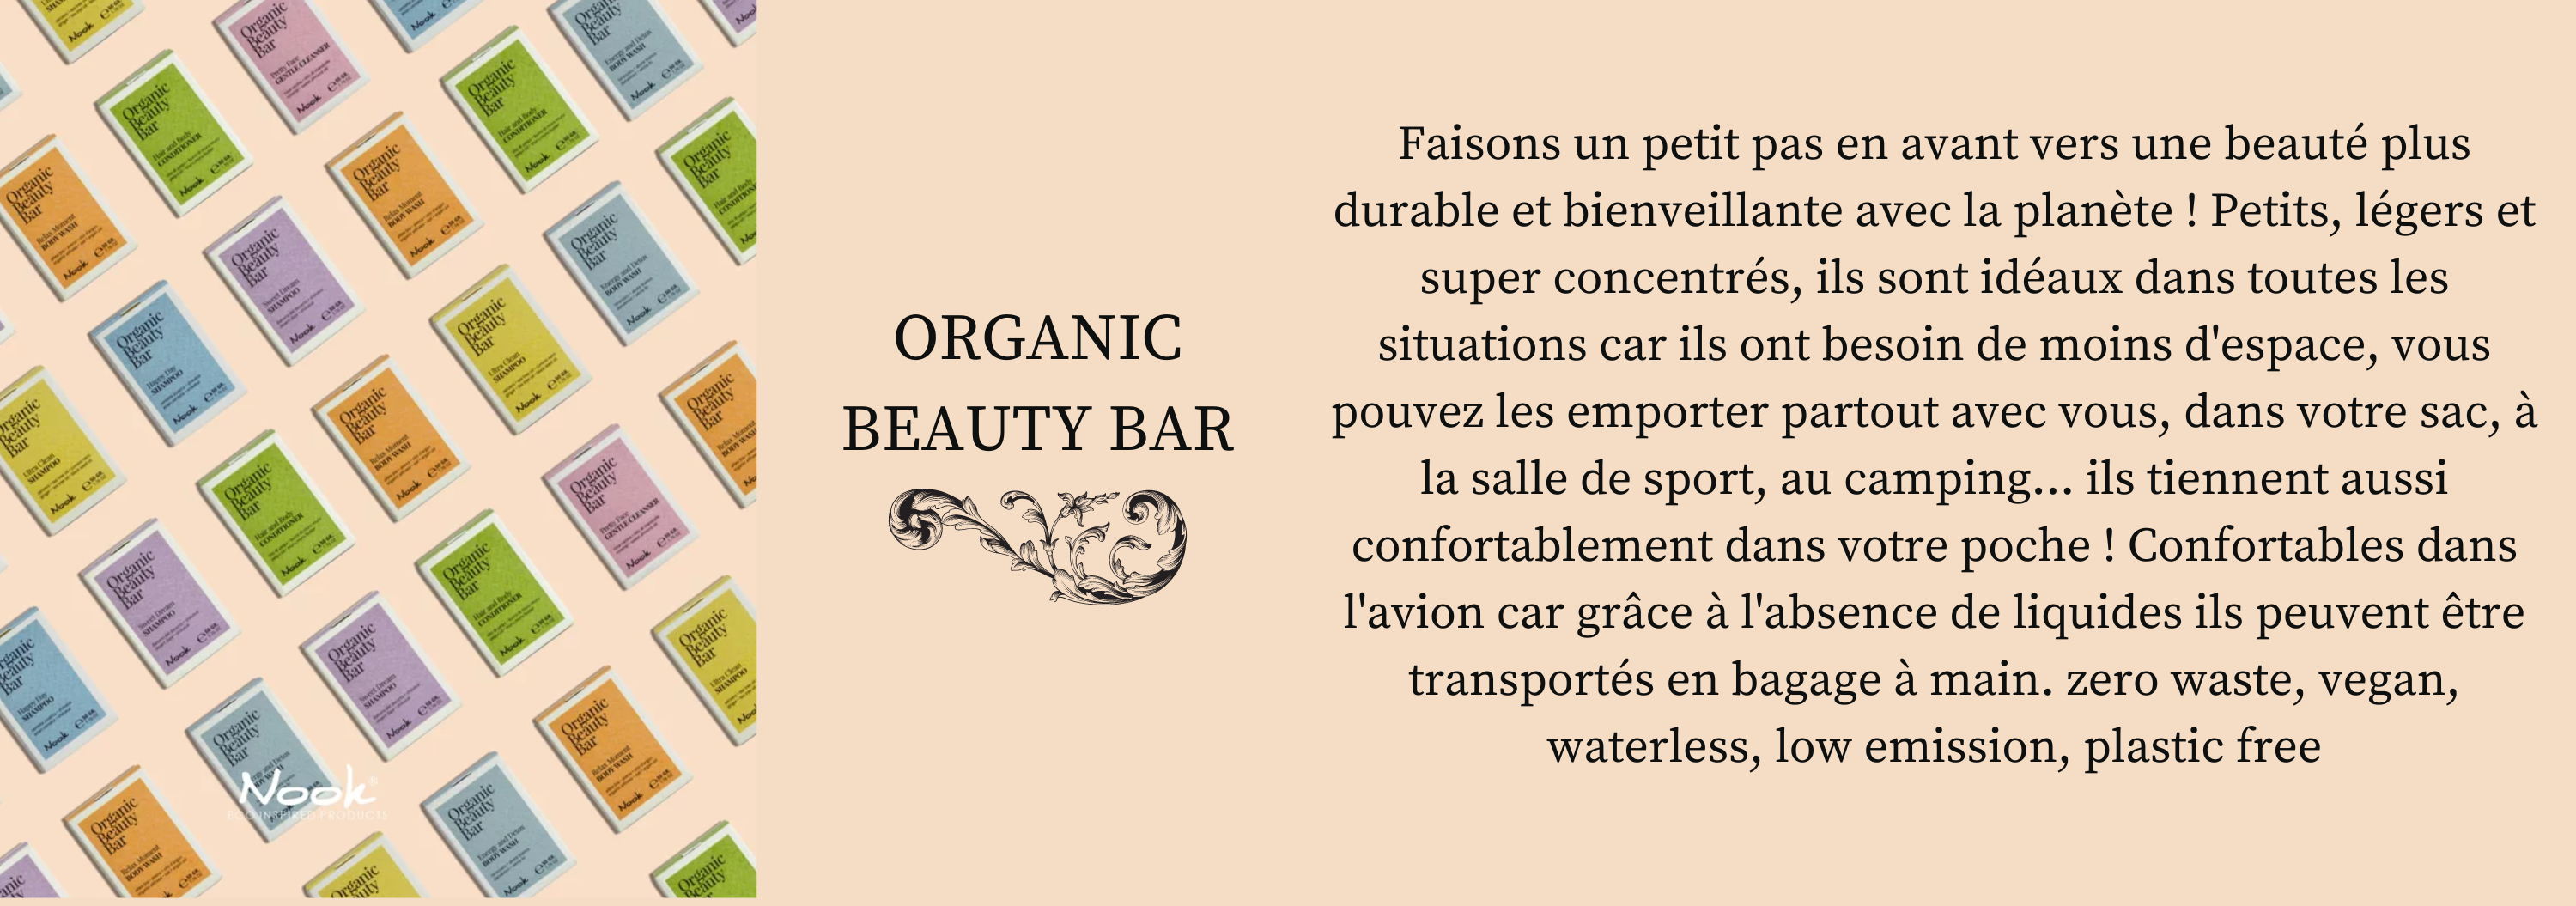 Organic beauty bar 